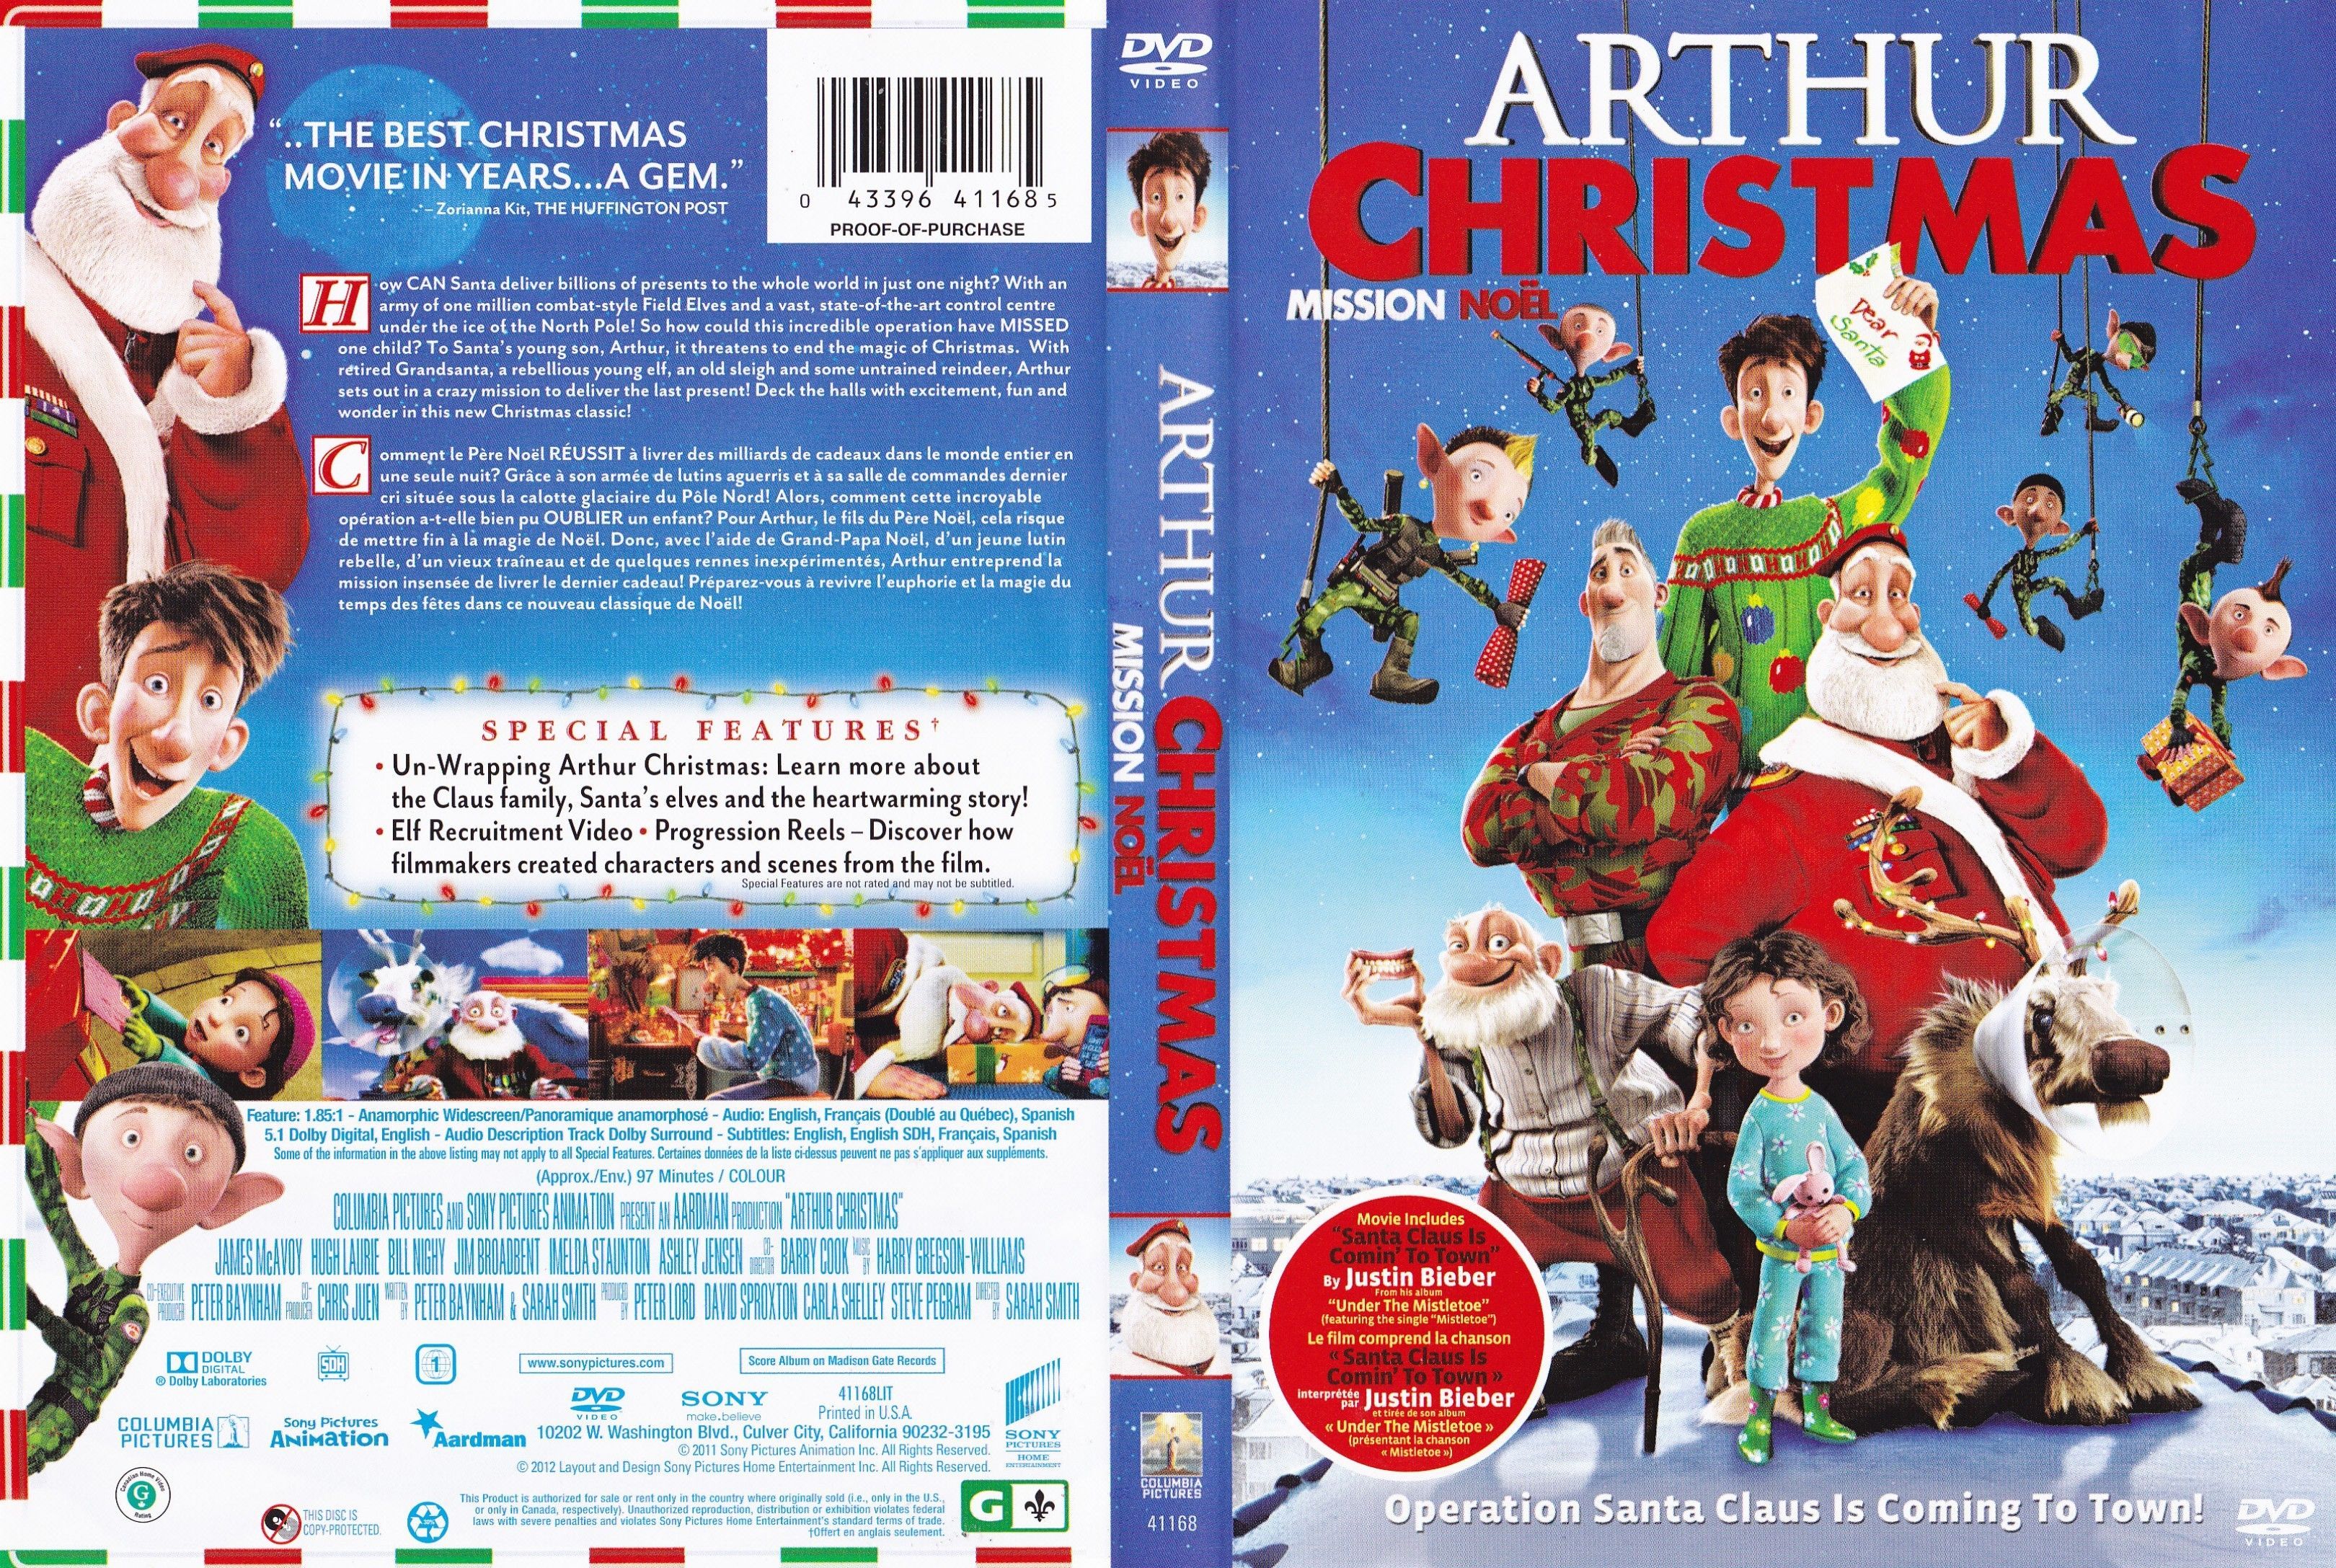 Arthur Christmas DVD Cover. Arthur christmas, Mini books, Dvd covers